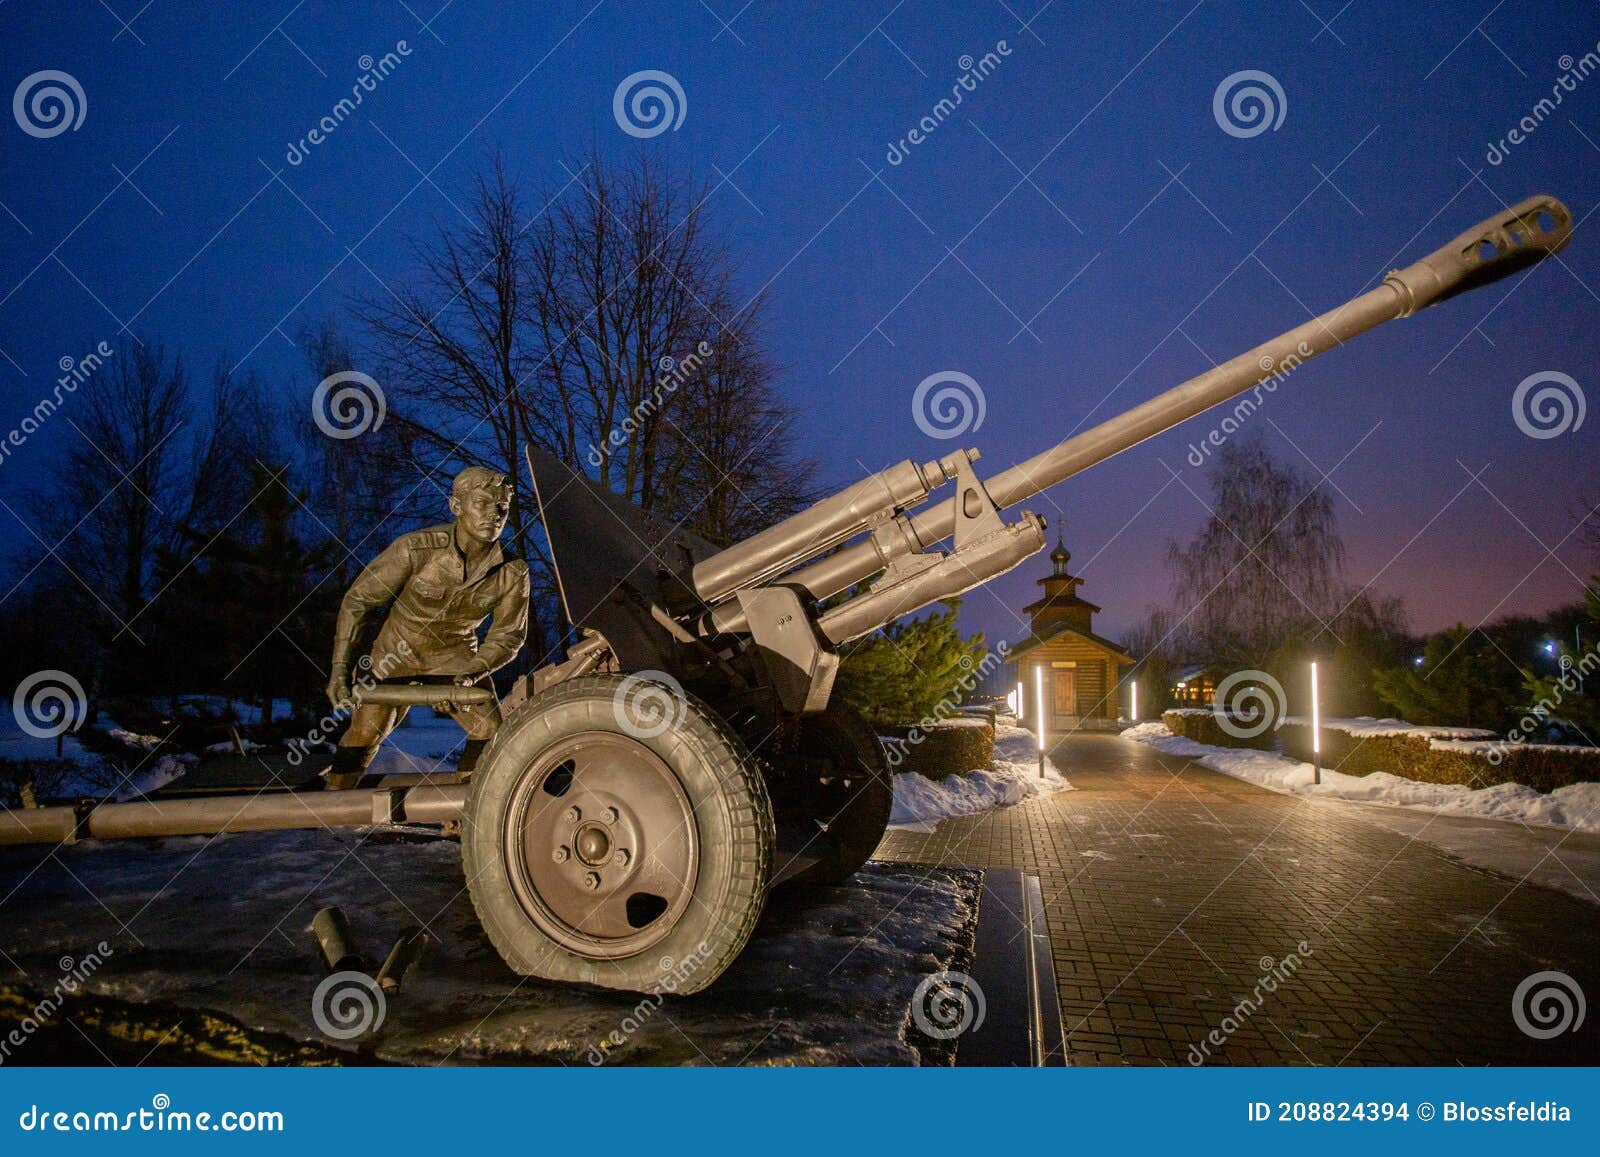 soldier monument in prokhorovka village belgorod region russ